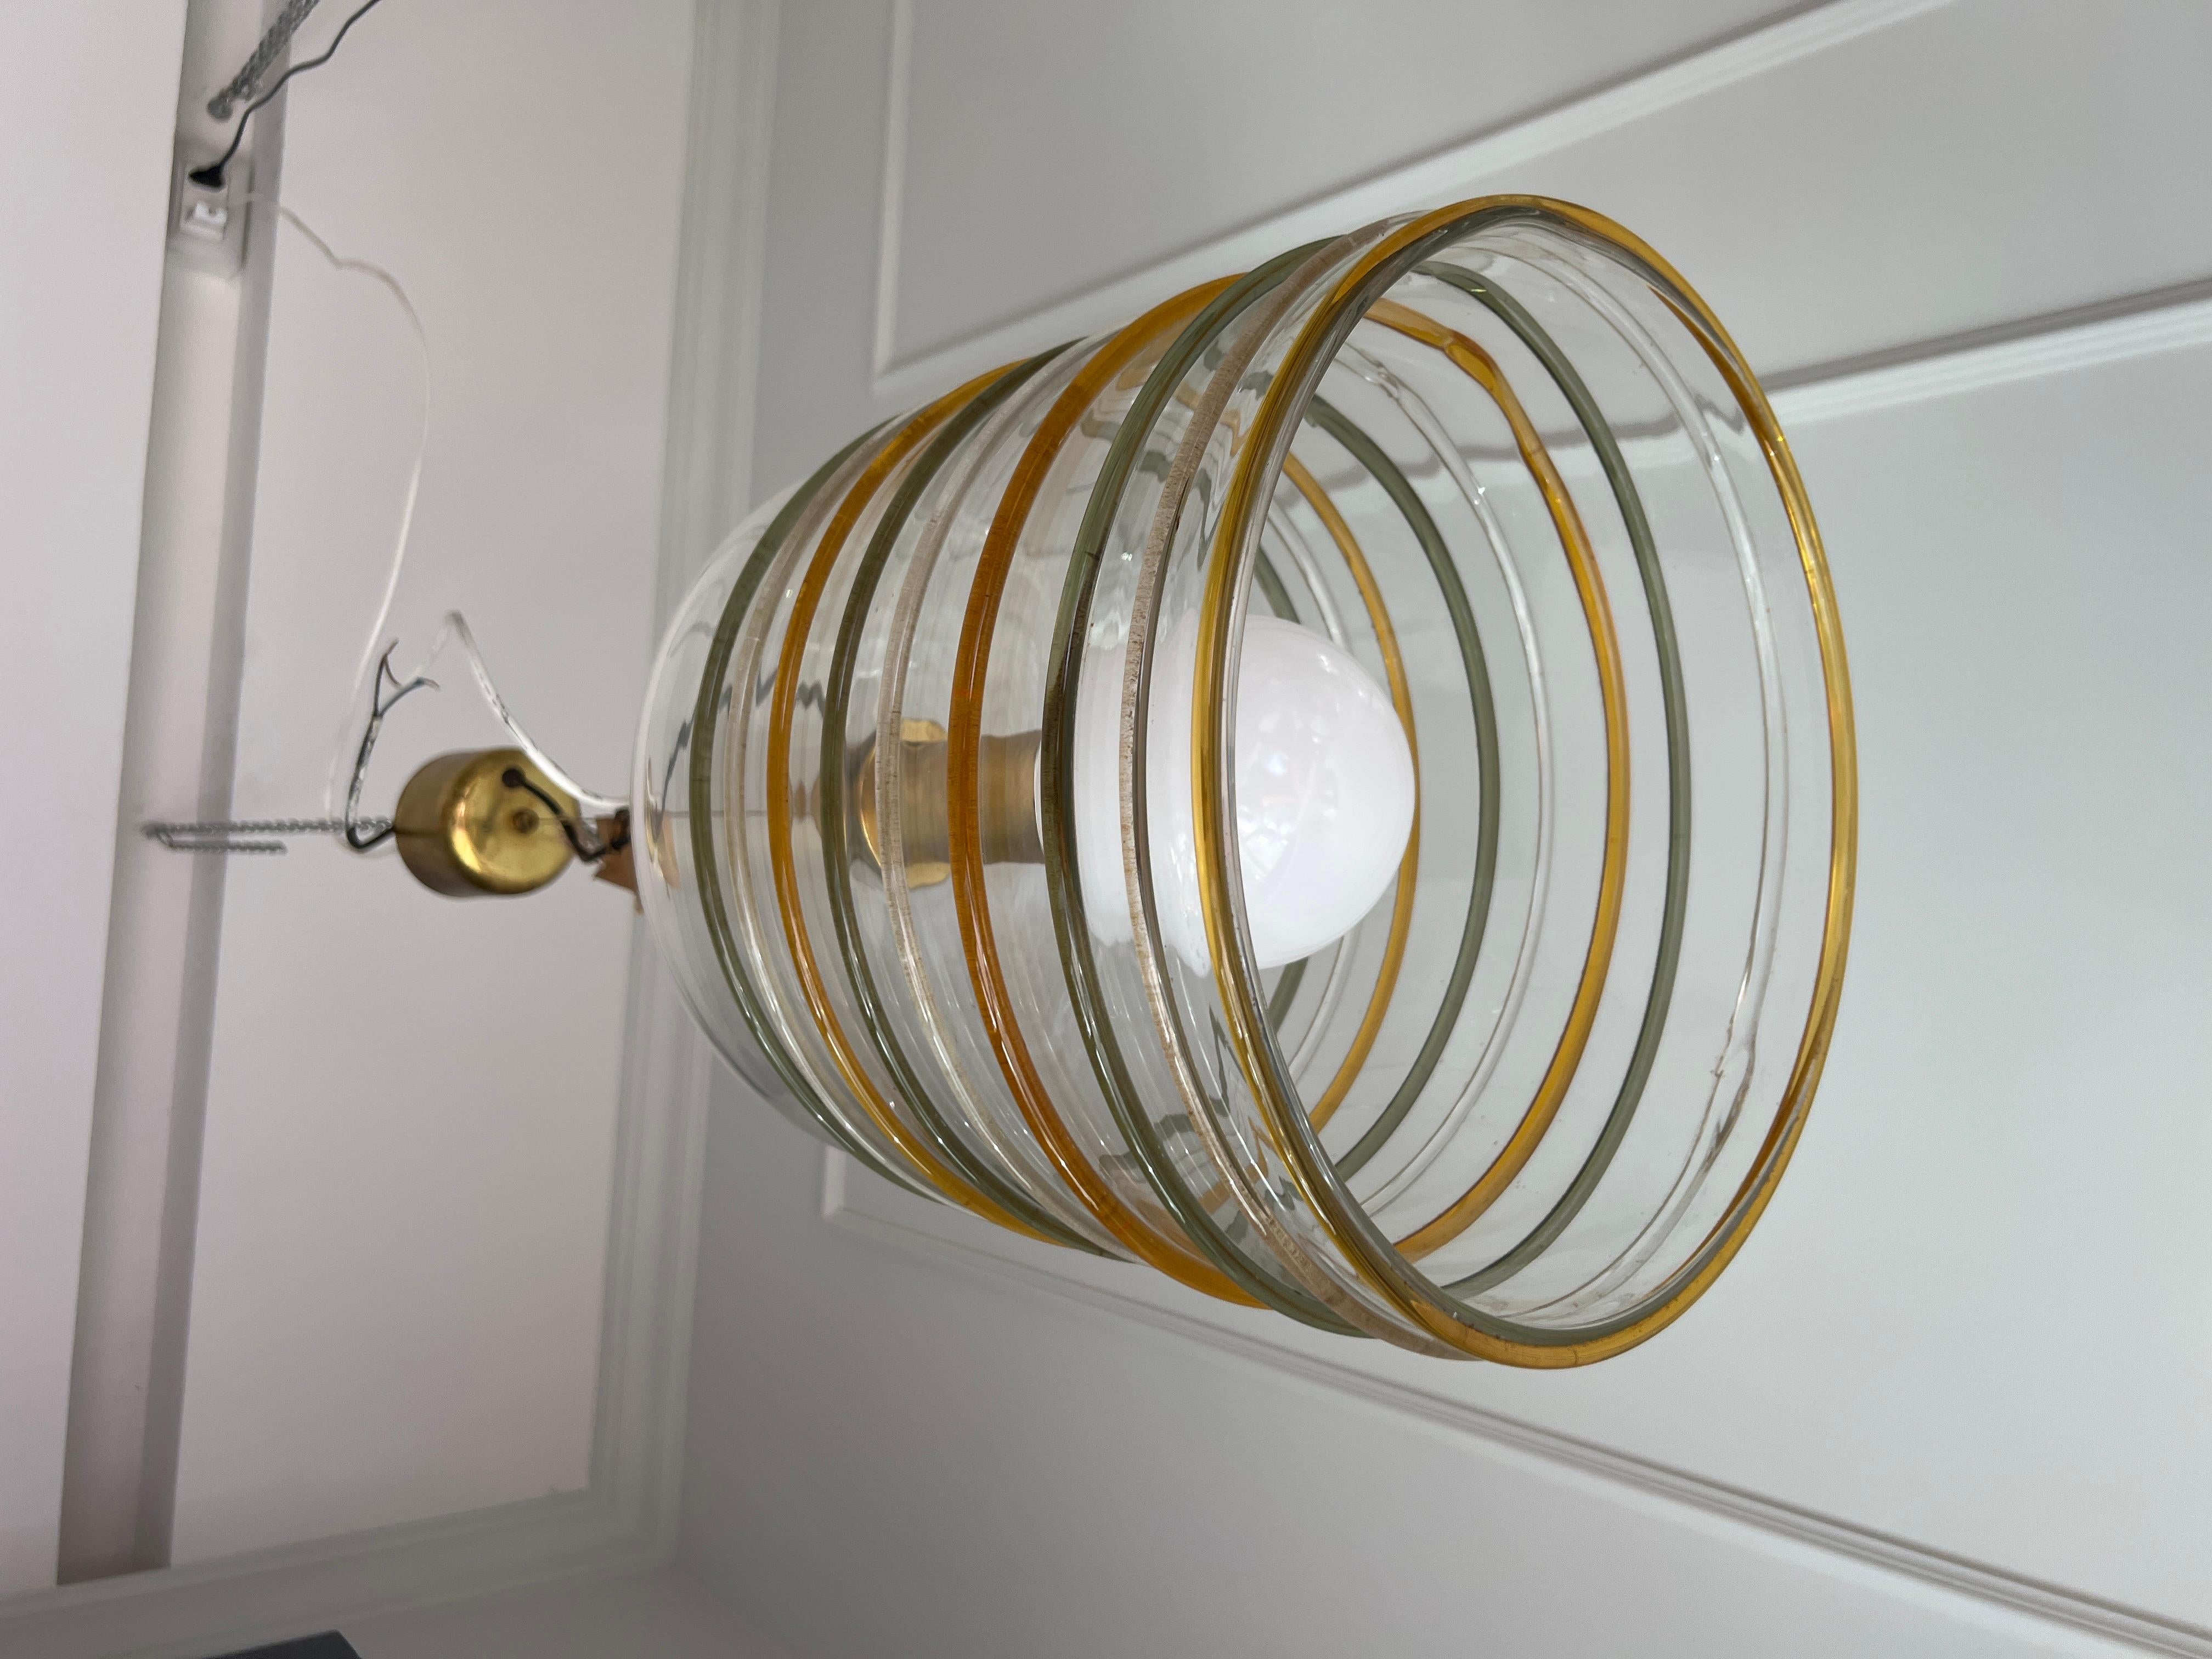 Elegante lampe en vetro di Murano
Originale vintage 
